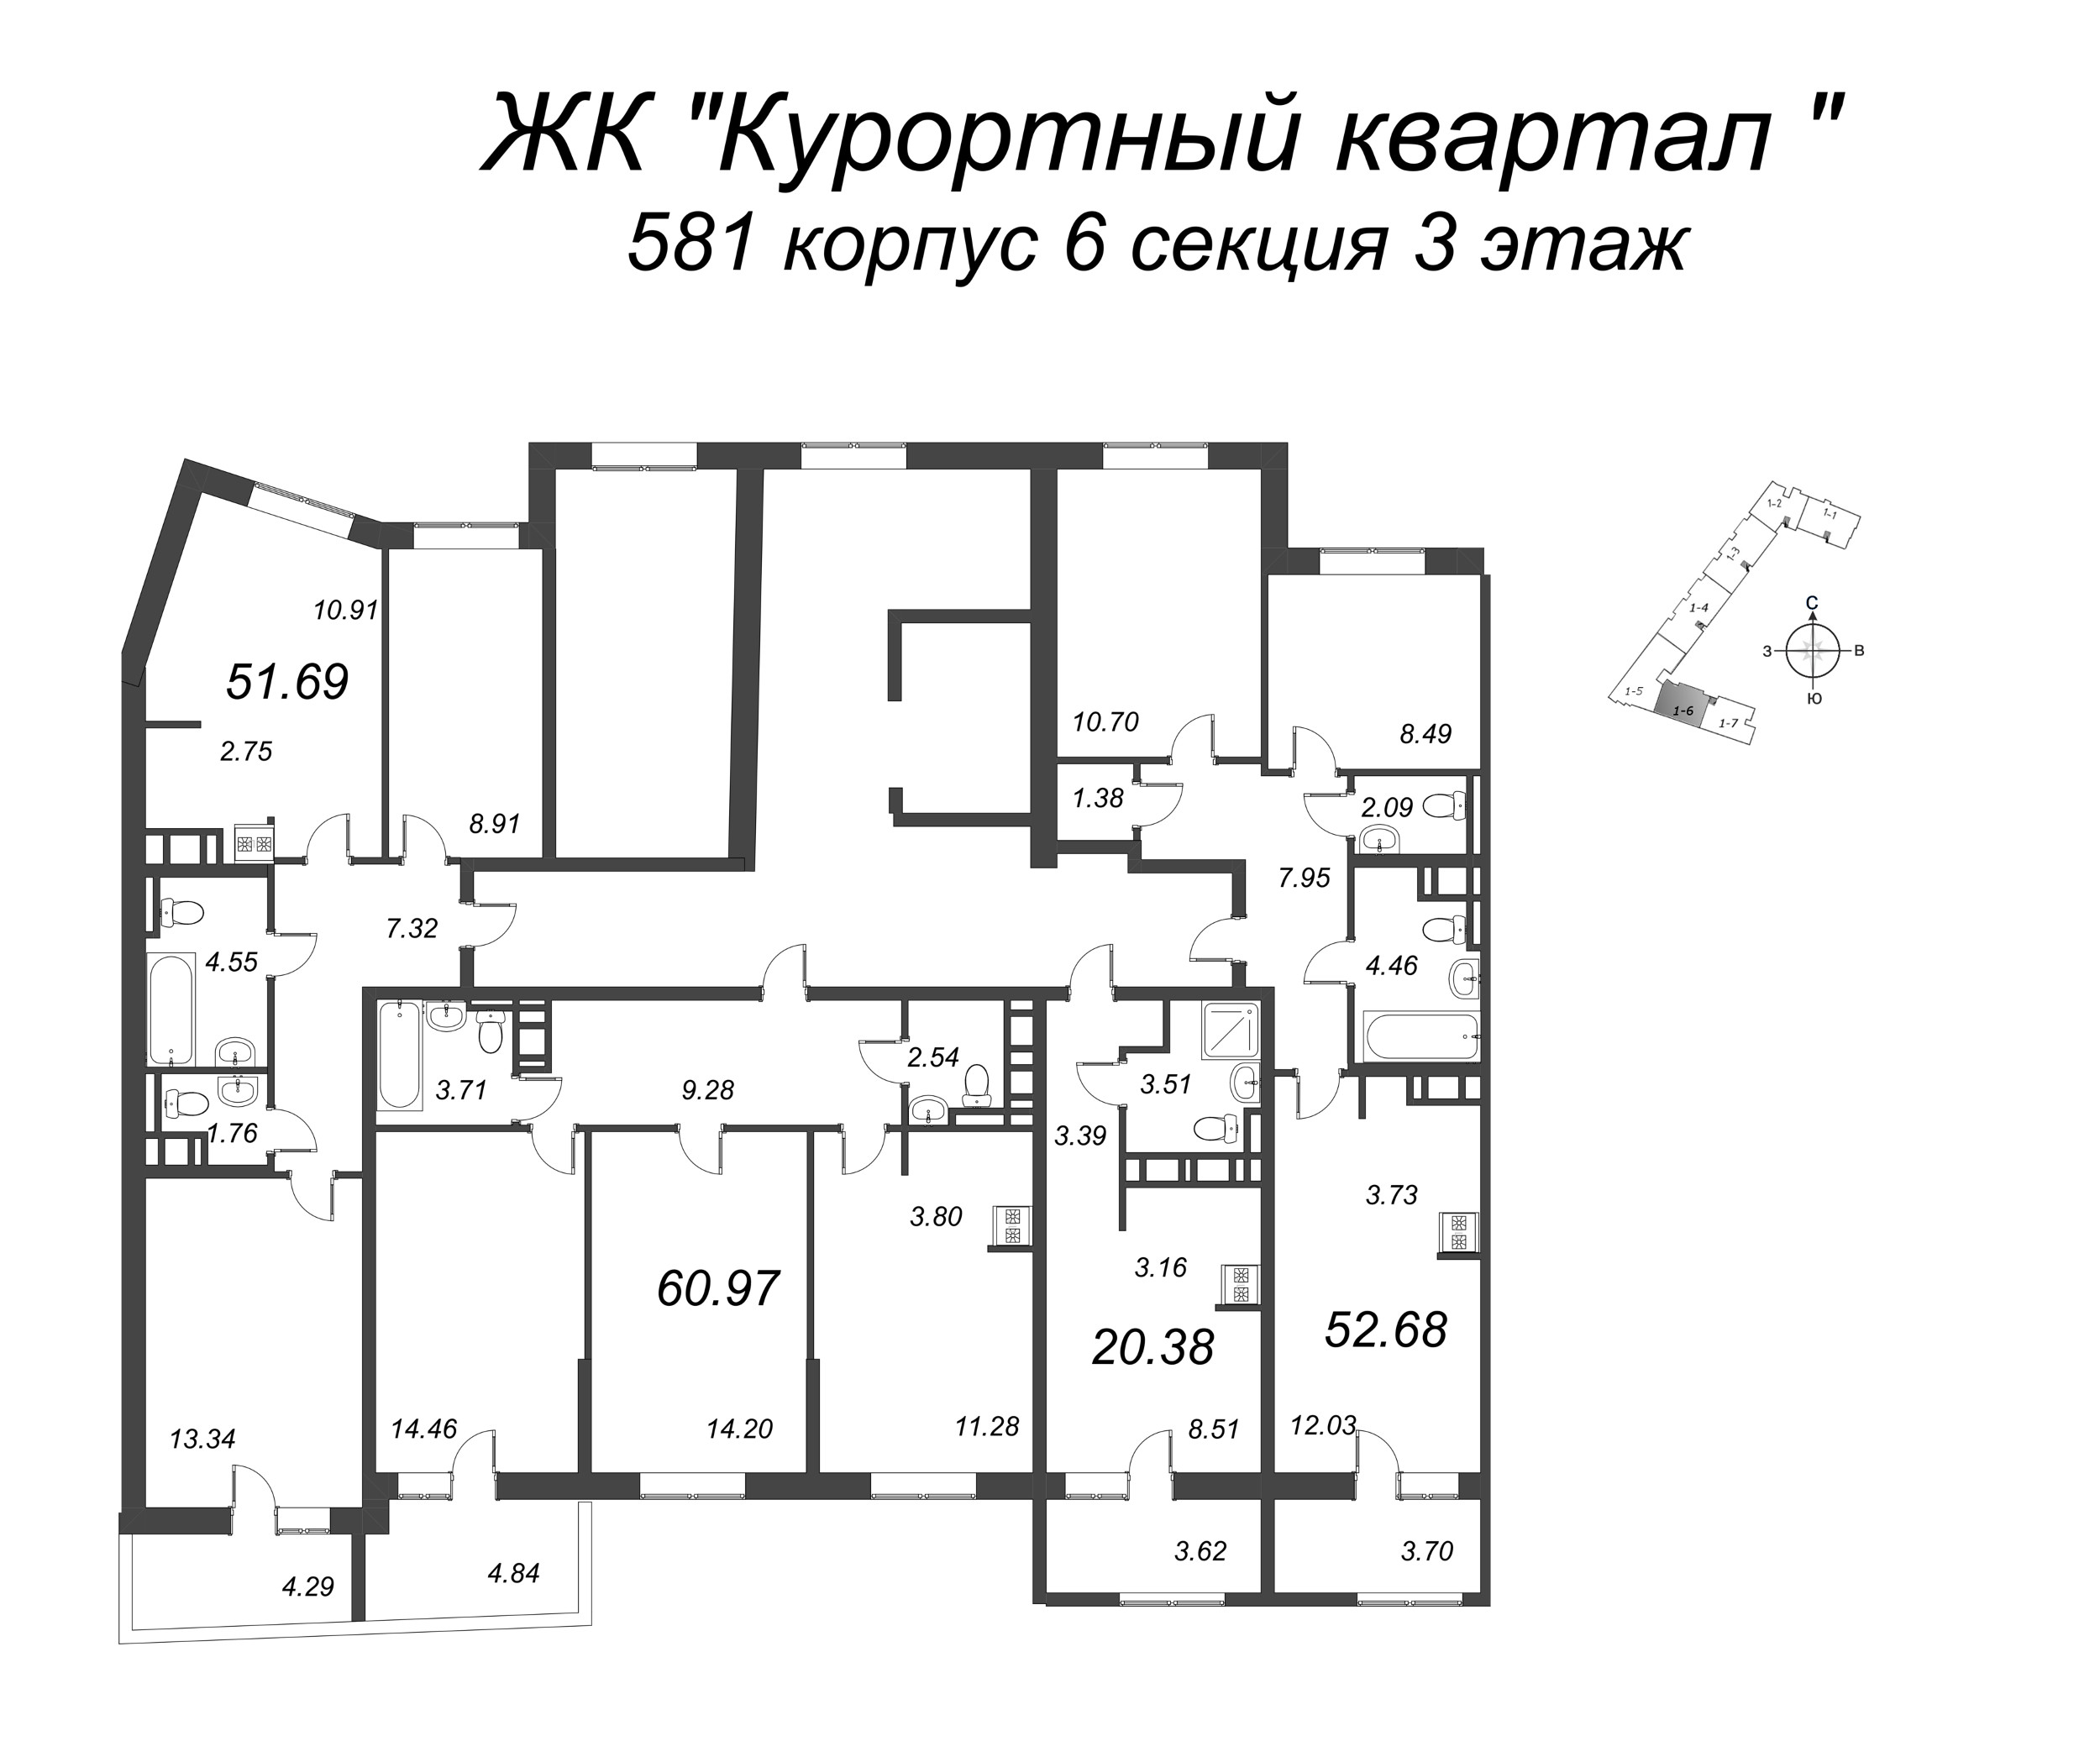 3-комнатная (Евро) квартира, 52.68 м² - планировка этажа